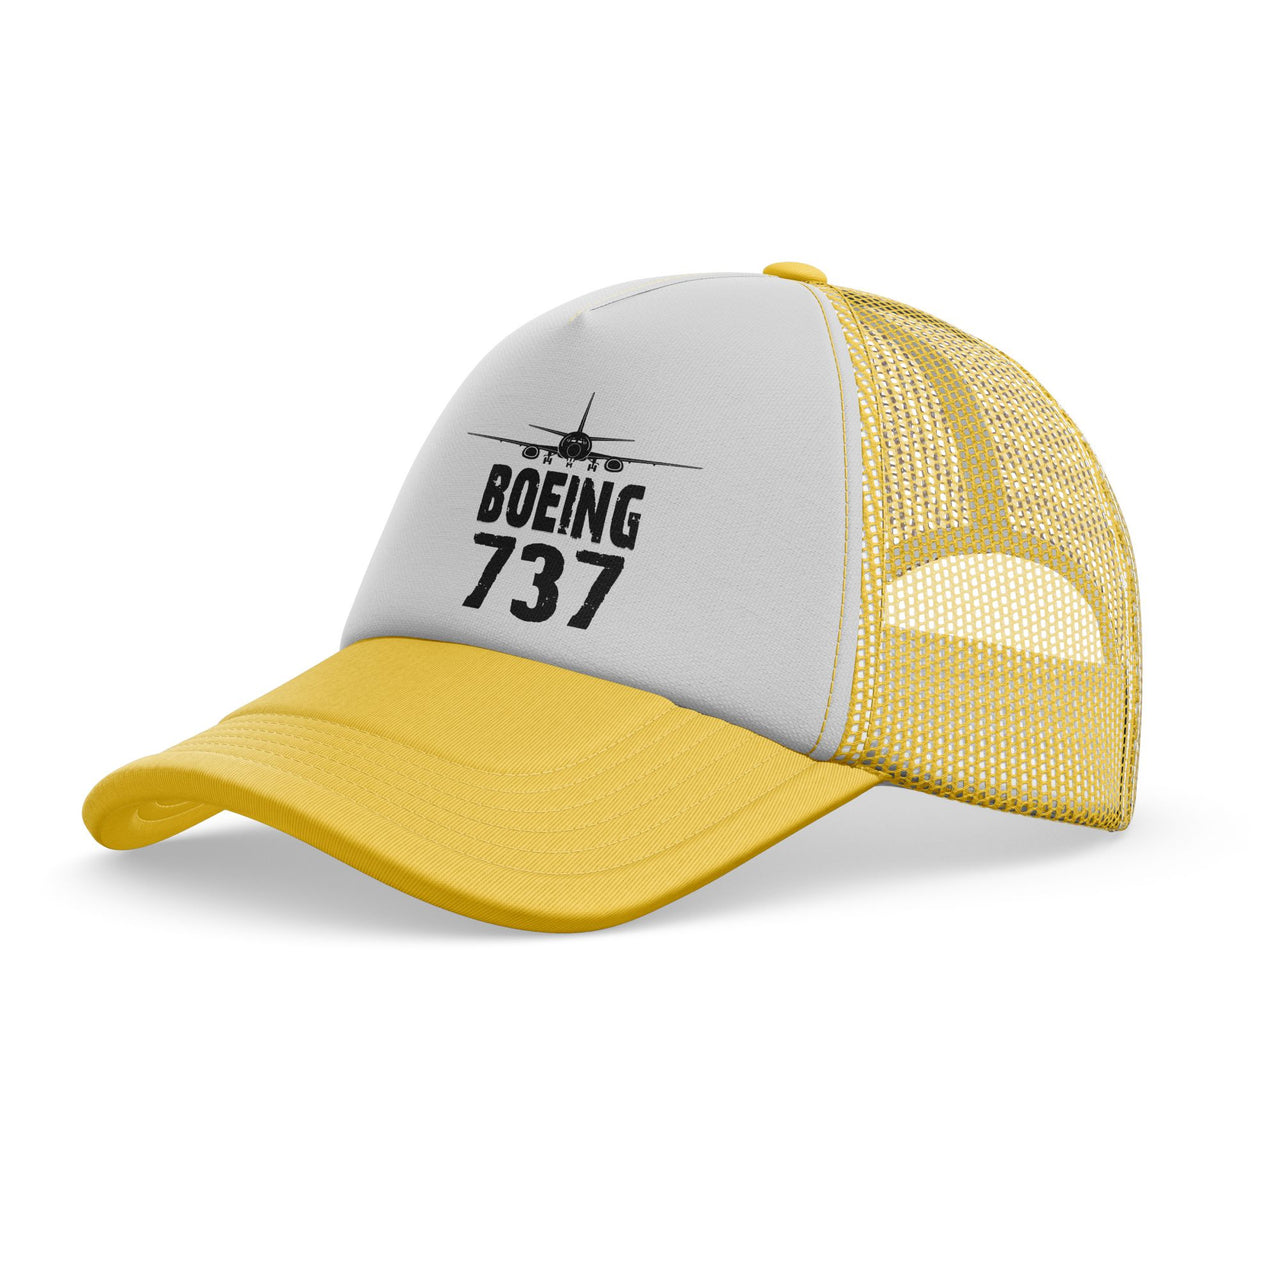 Boeing 737 & Plane Designed Trucker Caps & Hats